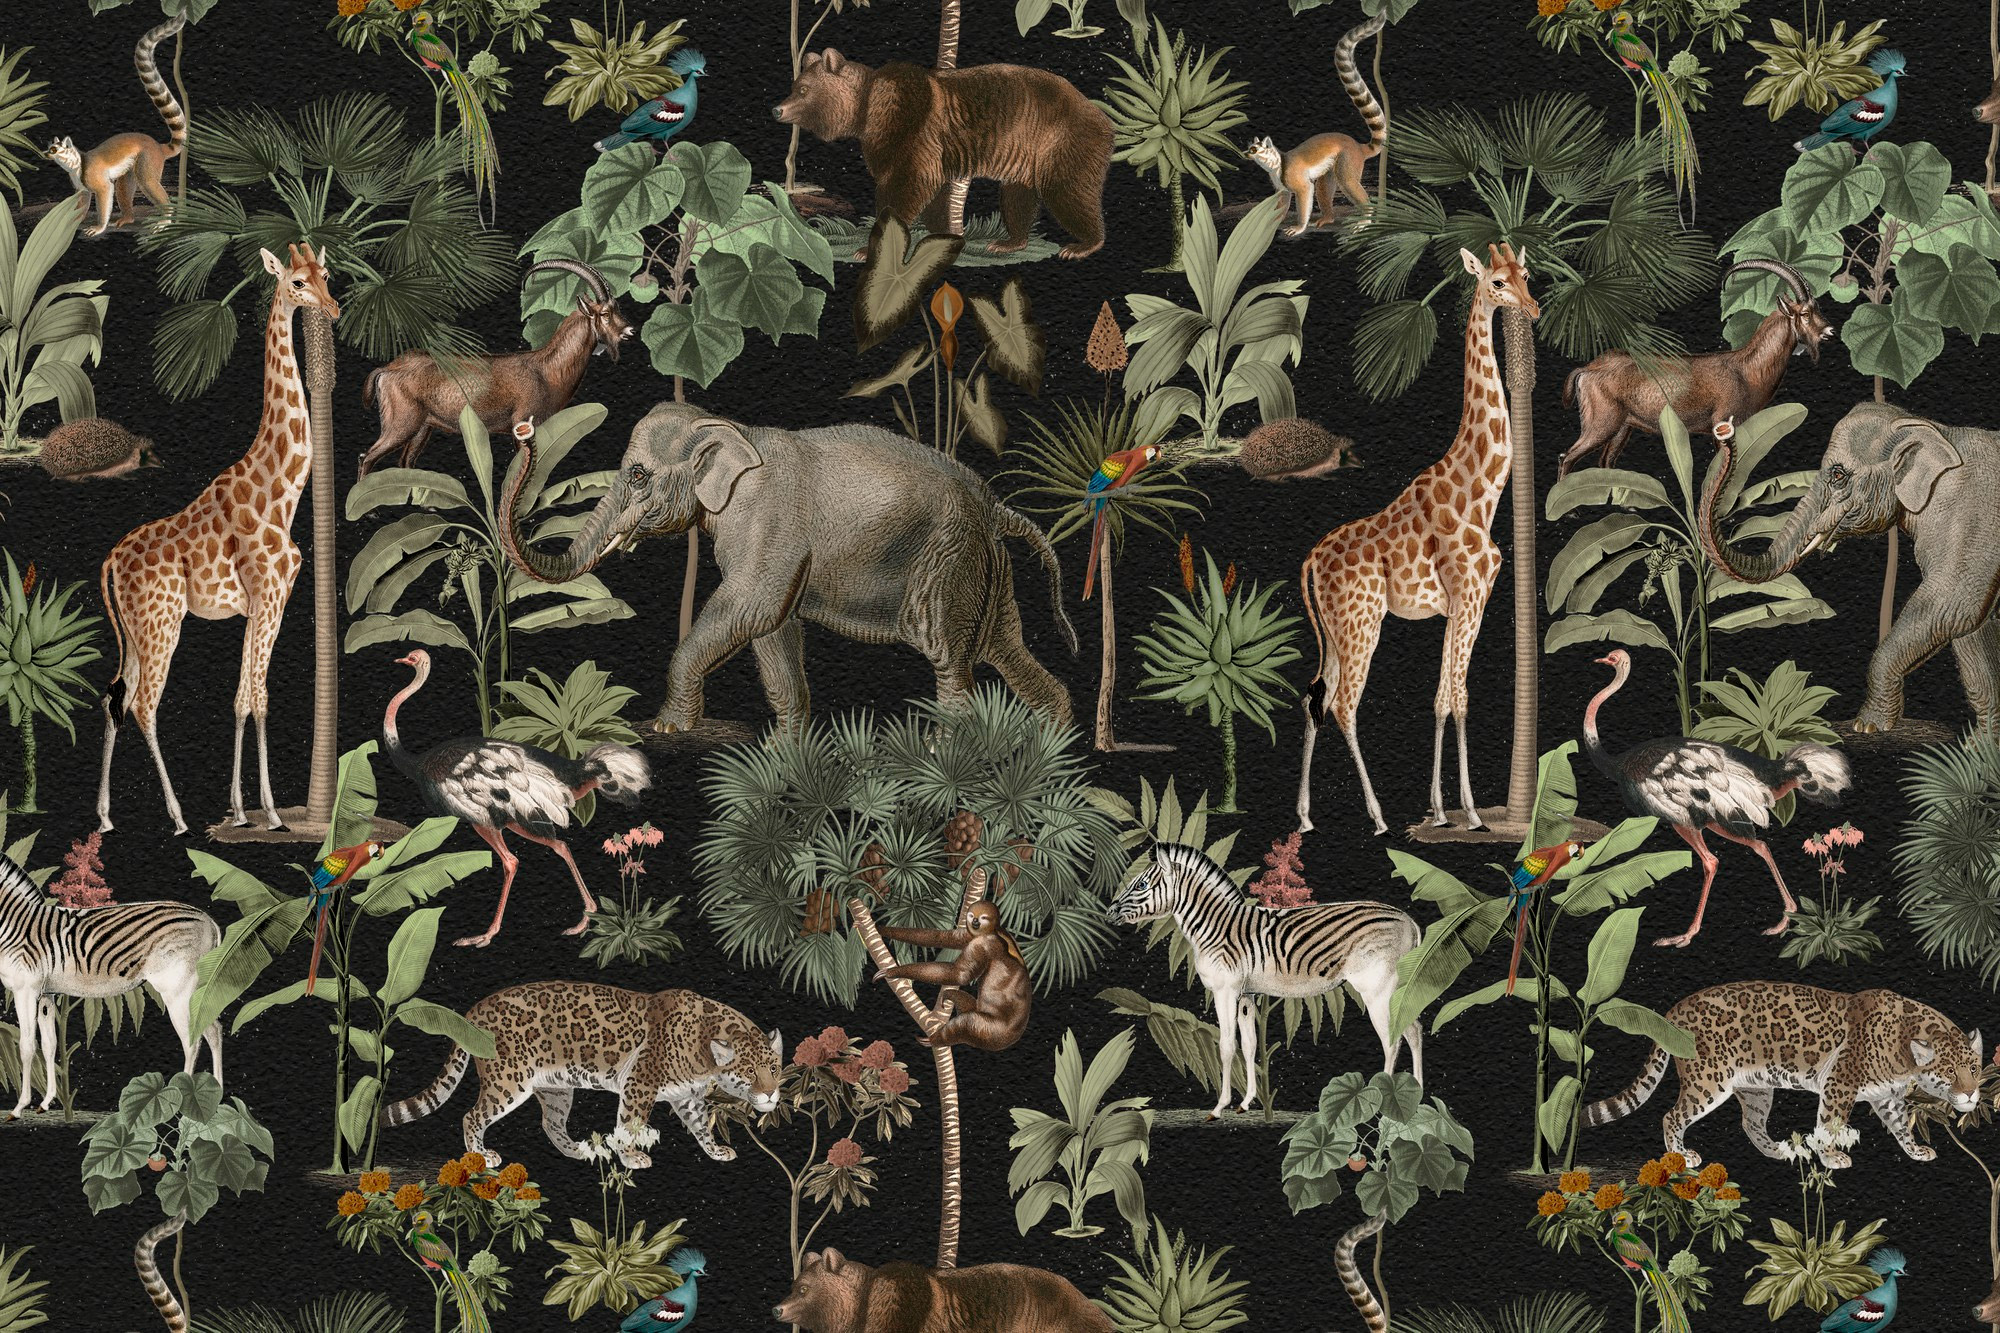 Image showing wild animals.